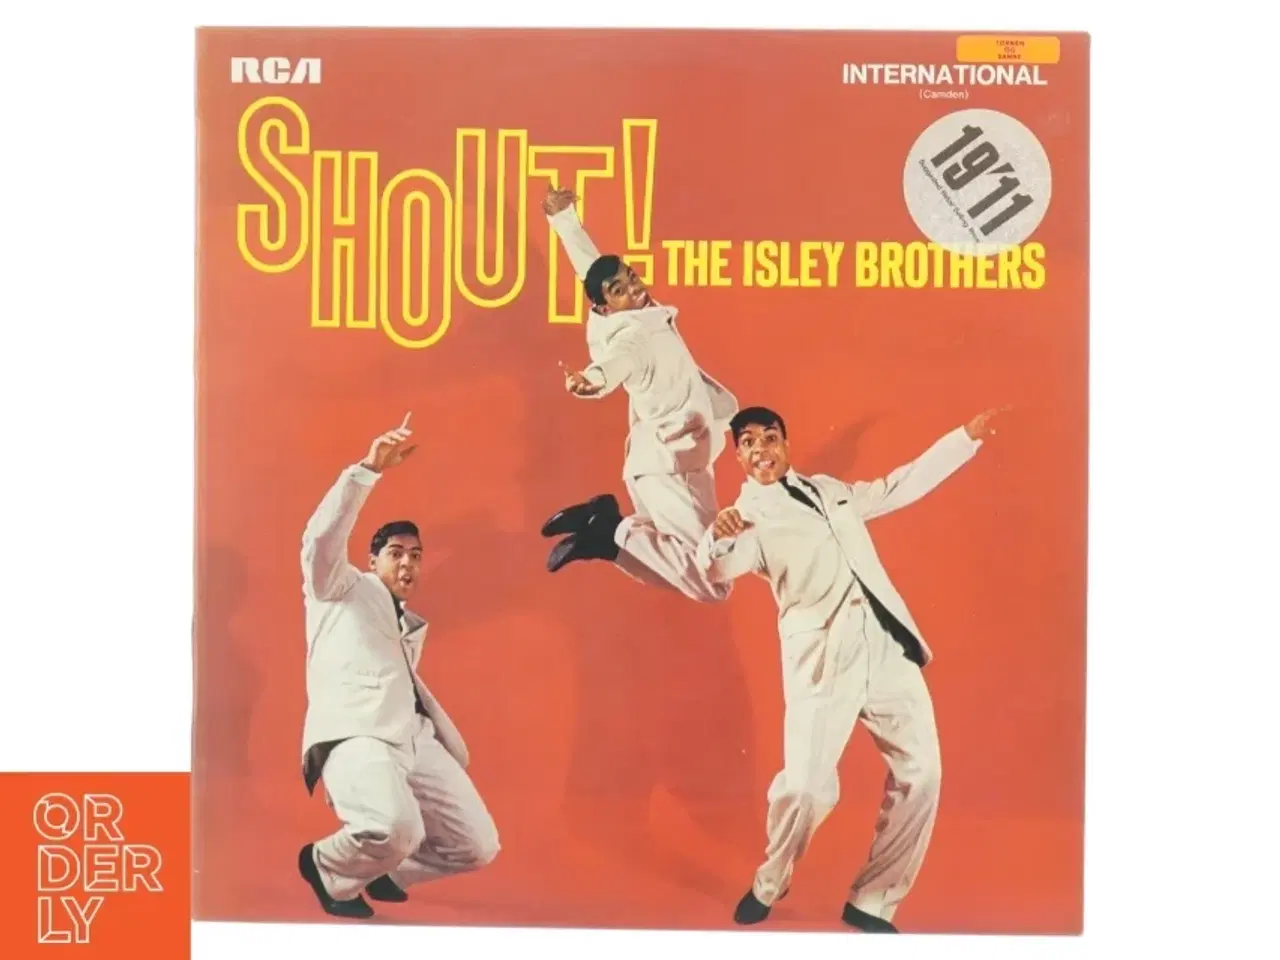 Billede 1 - The Isley Brothers - Shout! fra RCA (str. 31 x 31 cm)